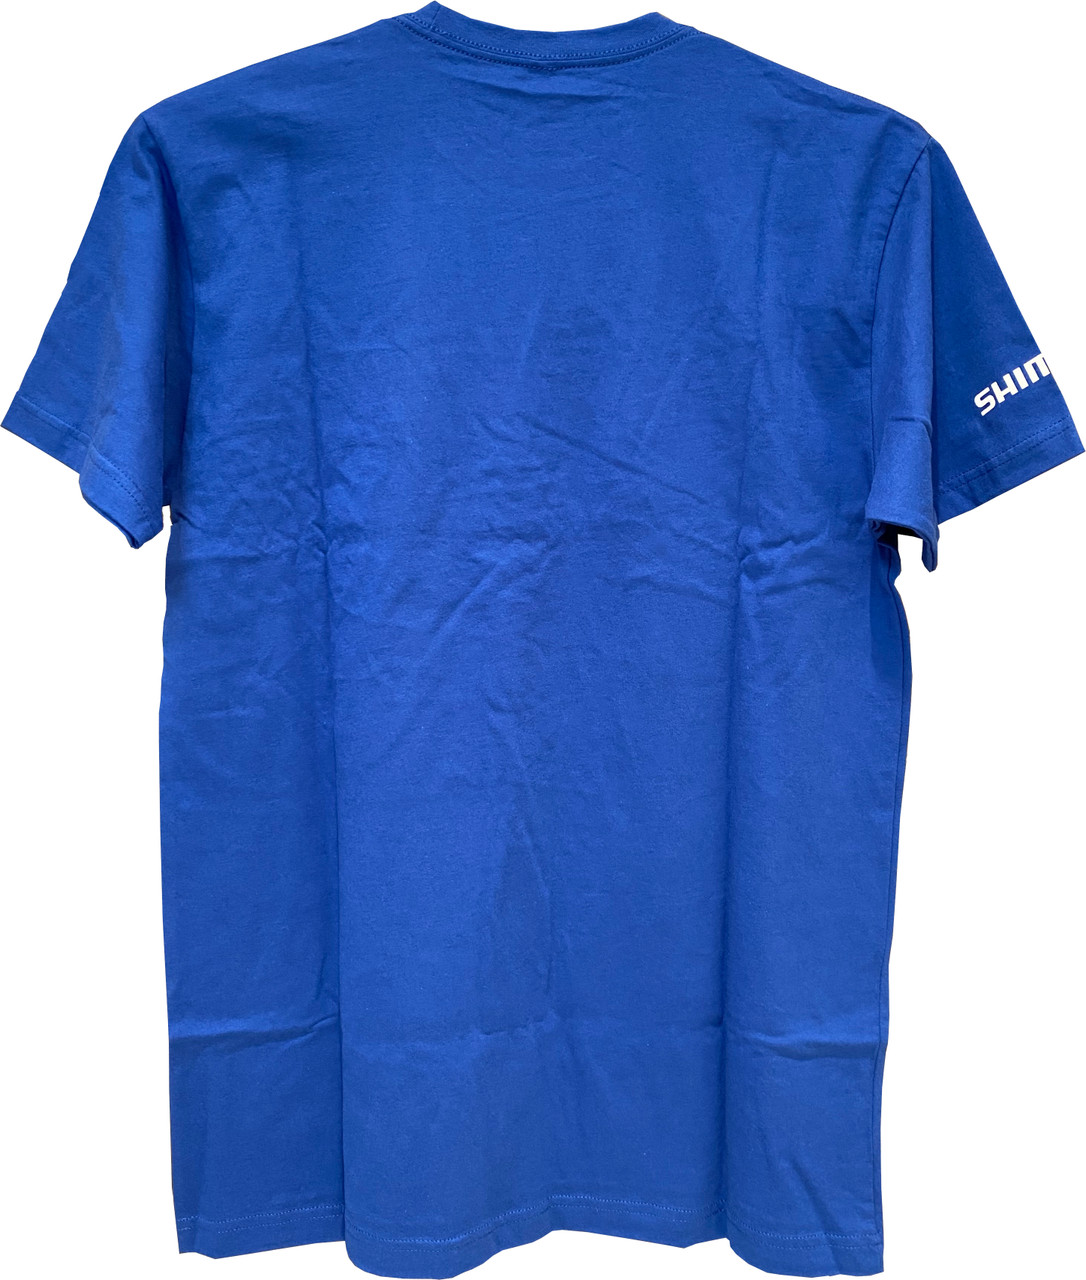 Shimano Short Sleeve Cotton Fishing Tee Shirt Royal Blue XL - ATEERSSSXLMRB